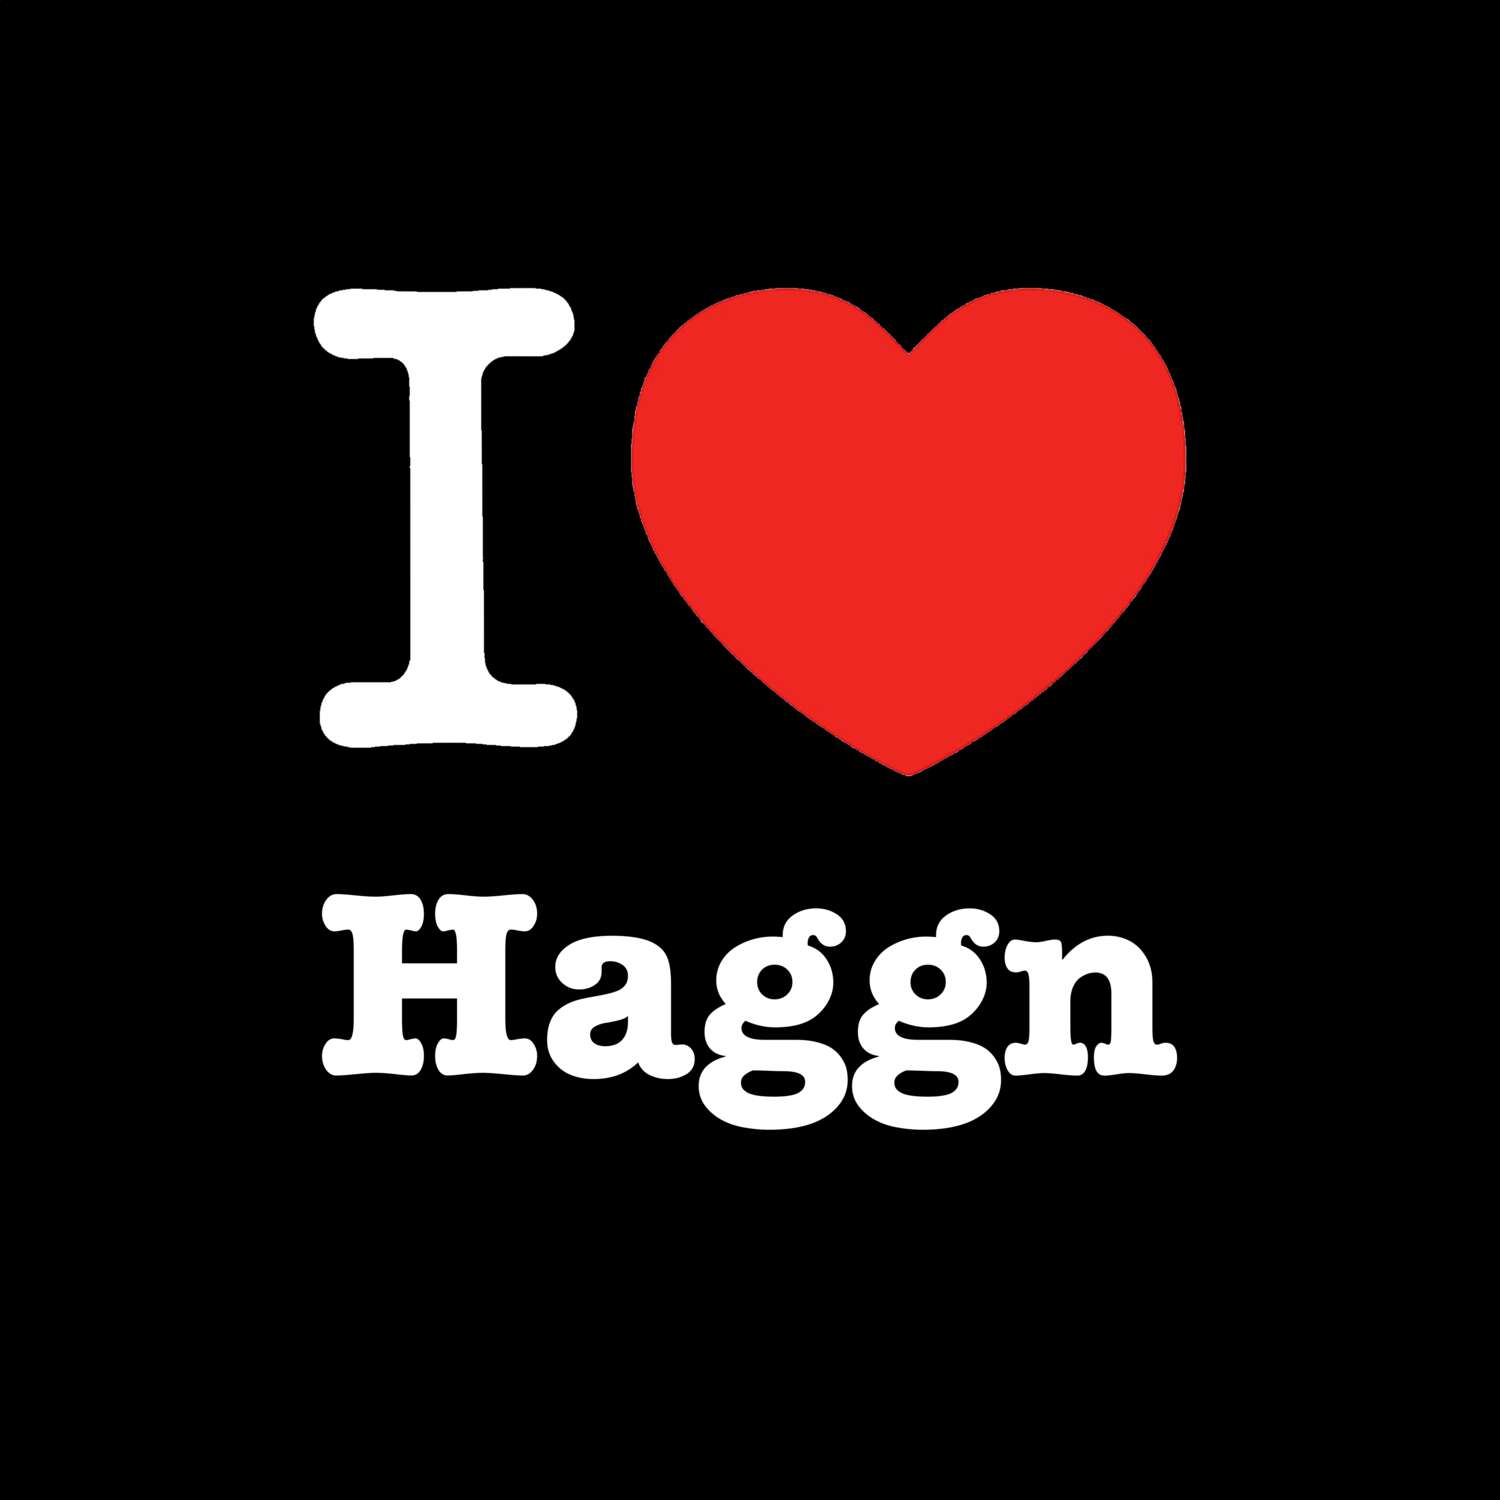 Haggn T-Shirt »I love«